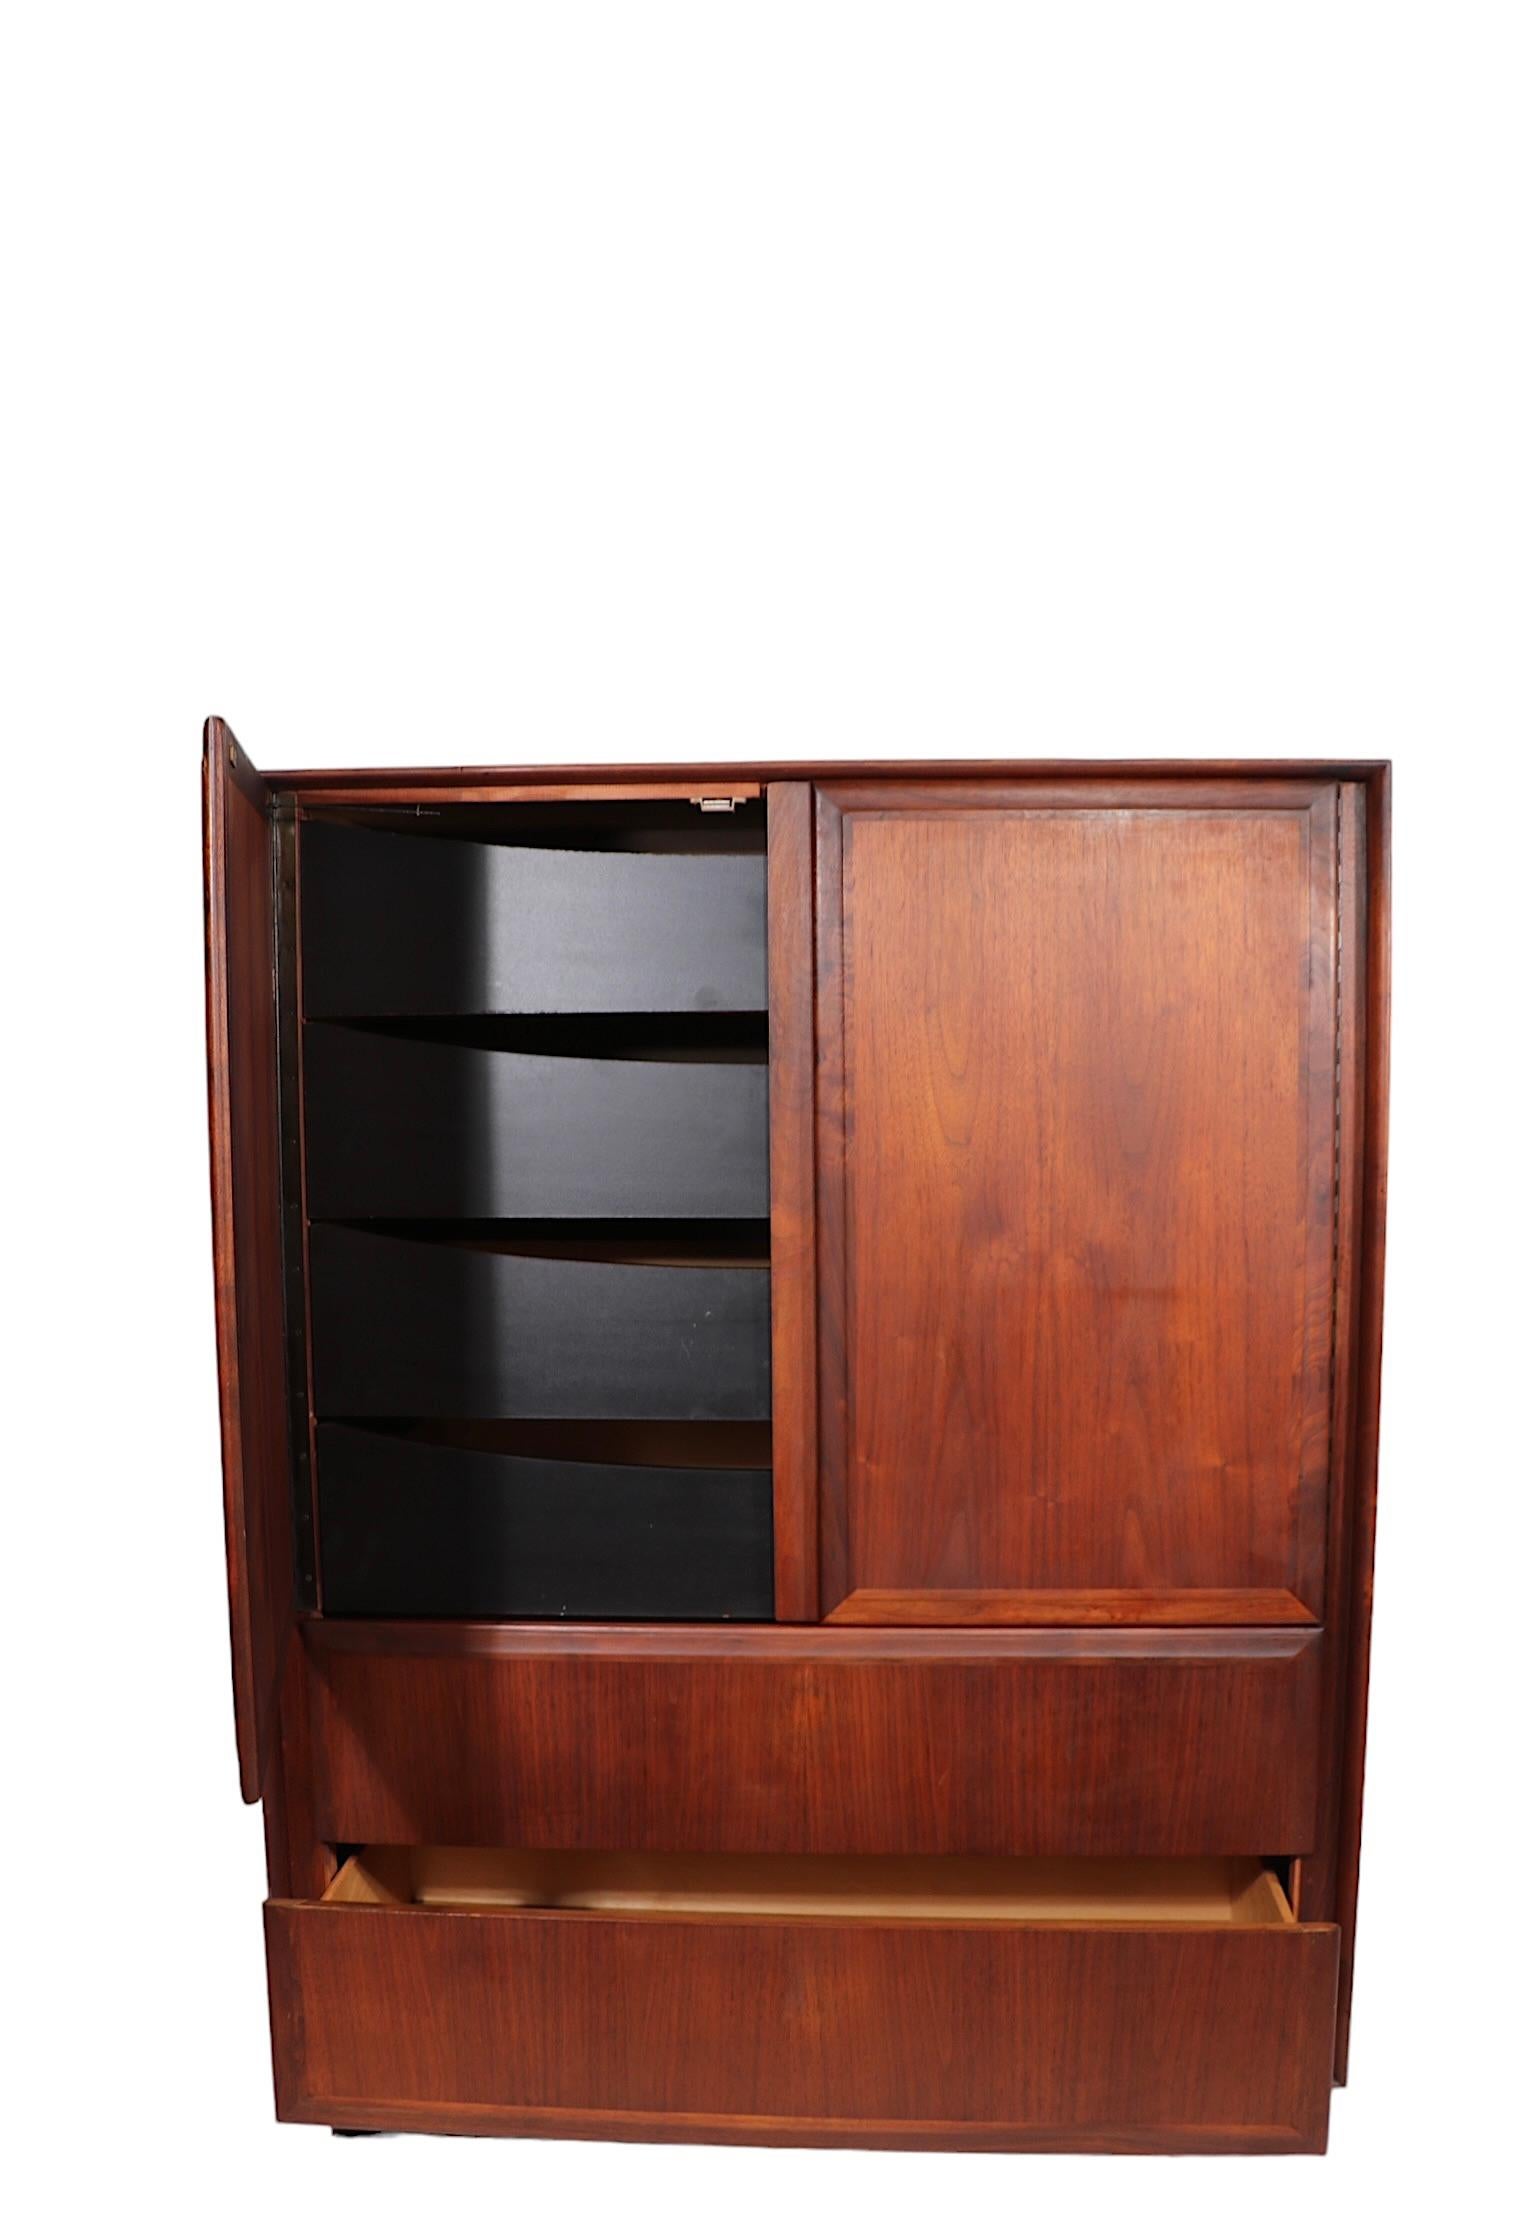 Veneer Mid Century Chest Dresser Chifferobe by Dillingham att. to Baughman c 1960/1970s For Sale